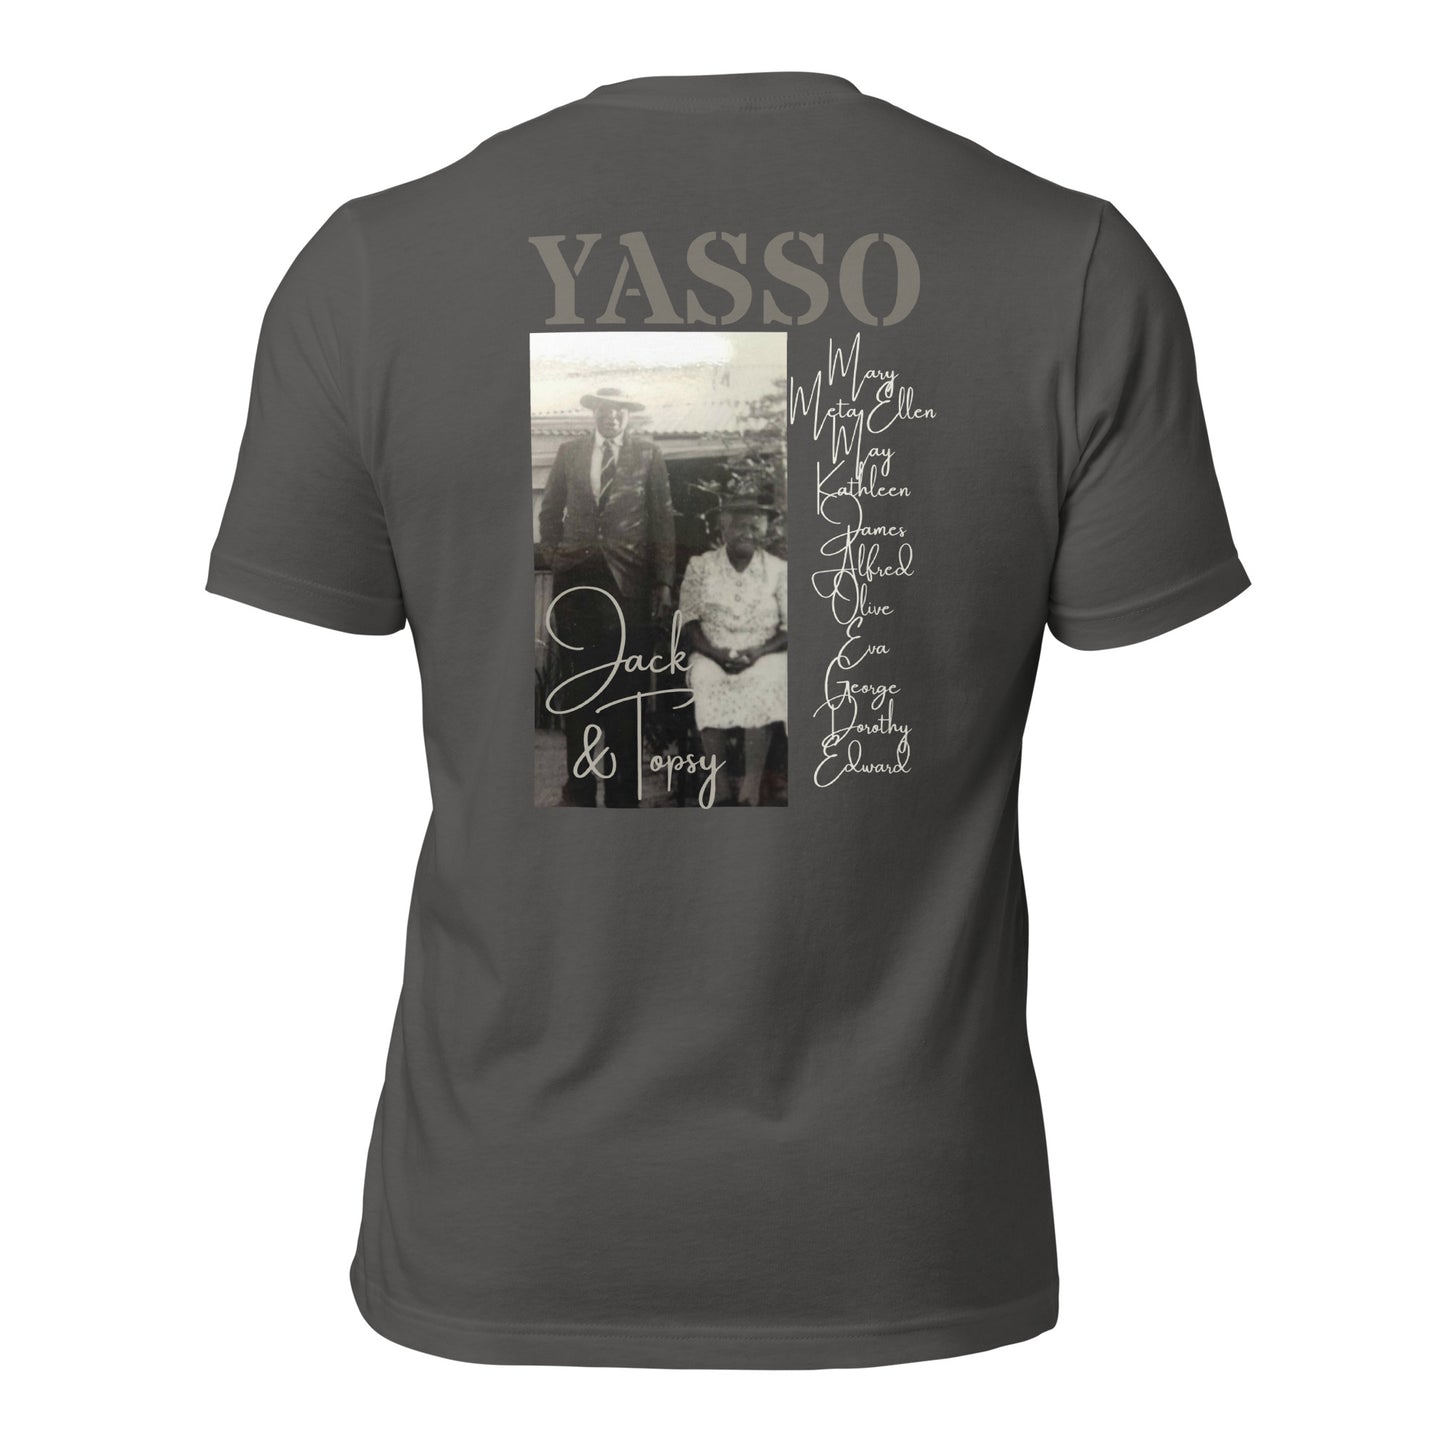 Jack and Topsy Yasso Shirts Version 2 Unisex t-shirt